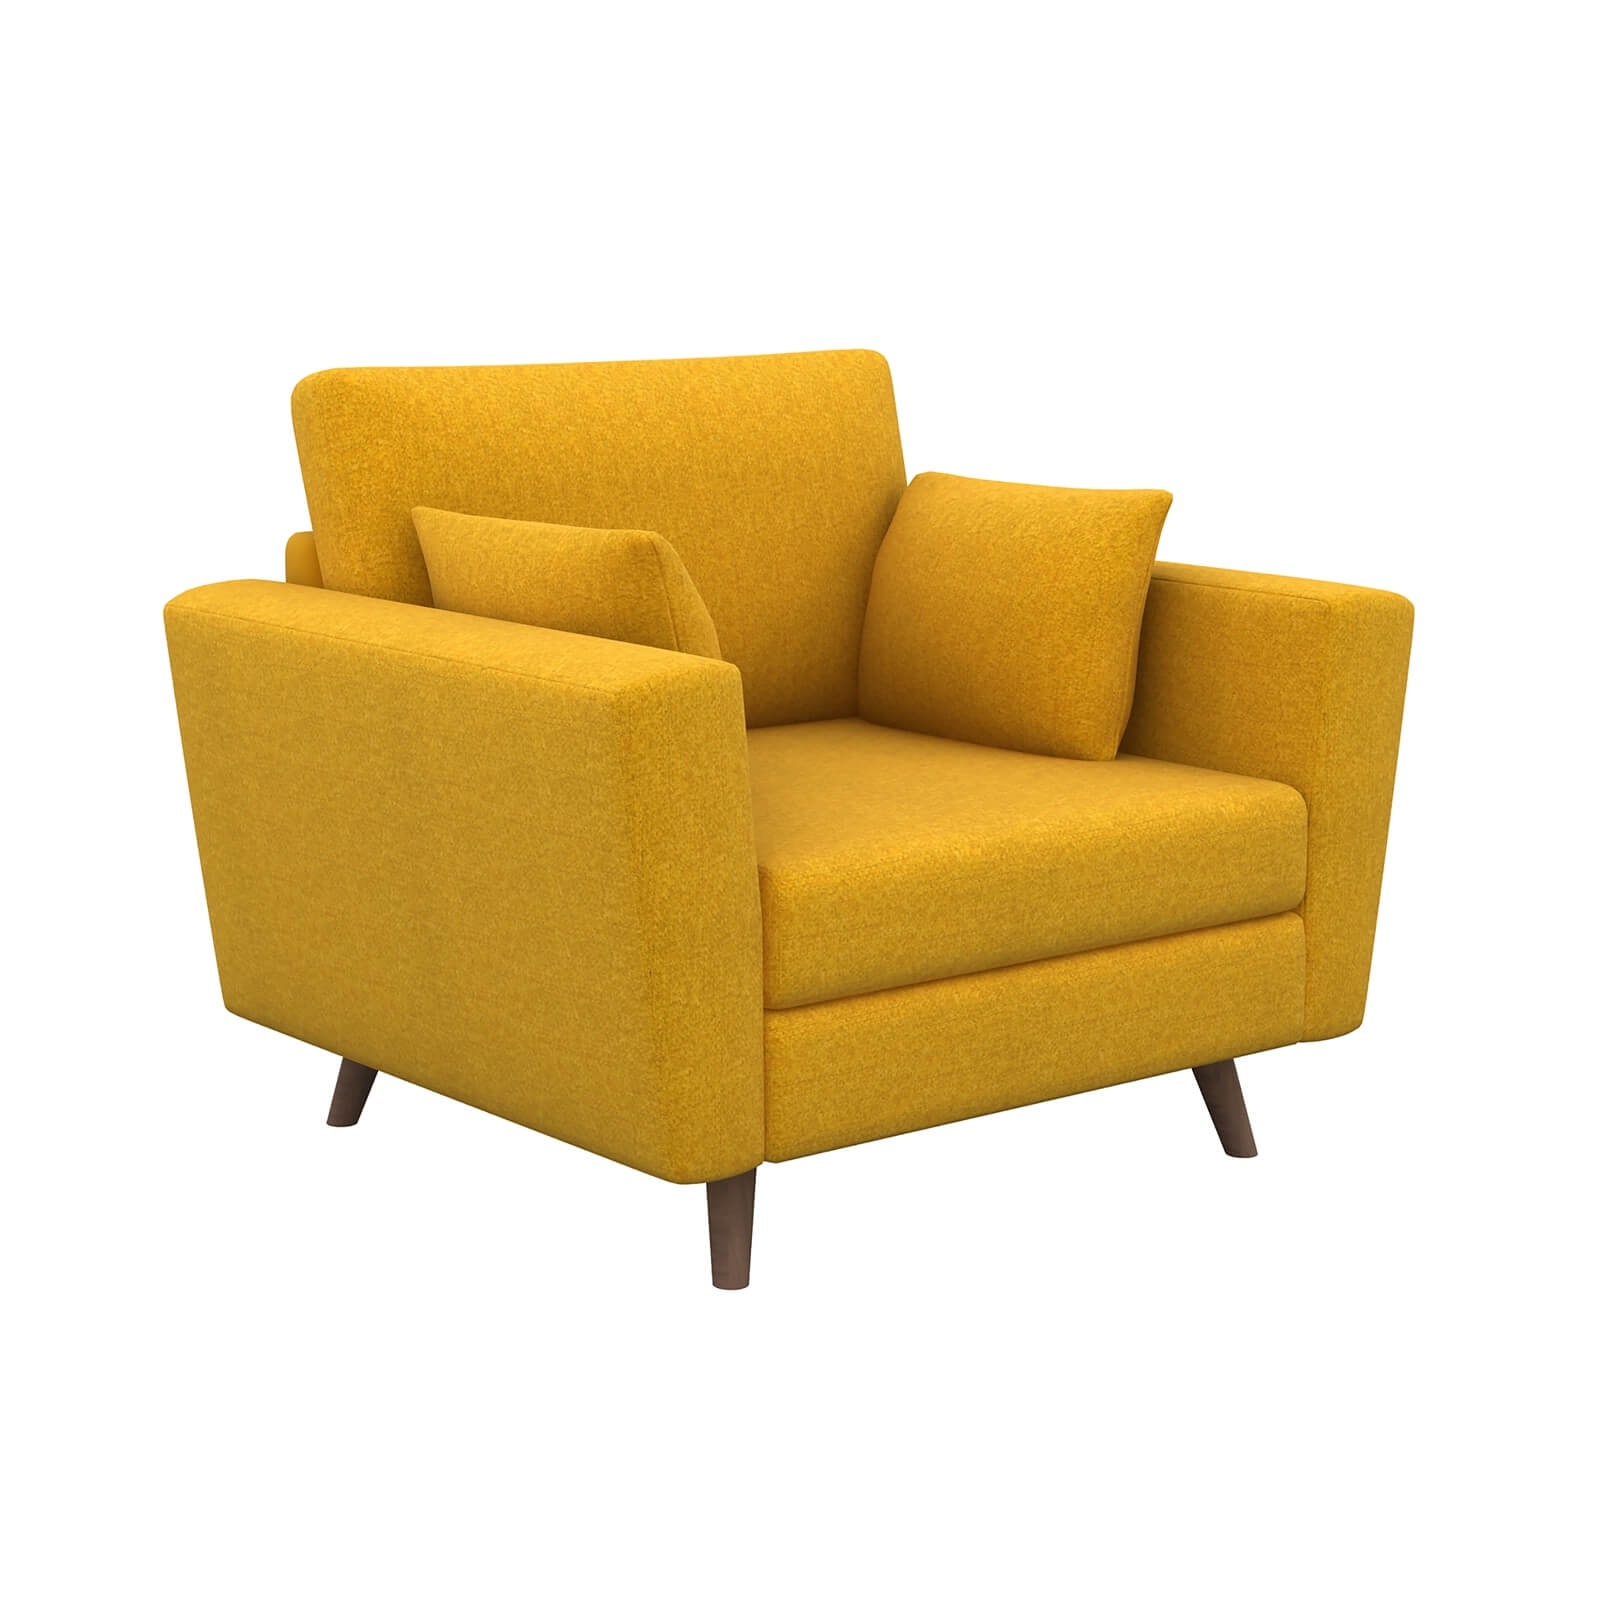 Lucia Cuddle Chair - Mustard